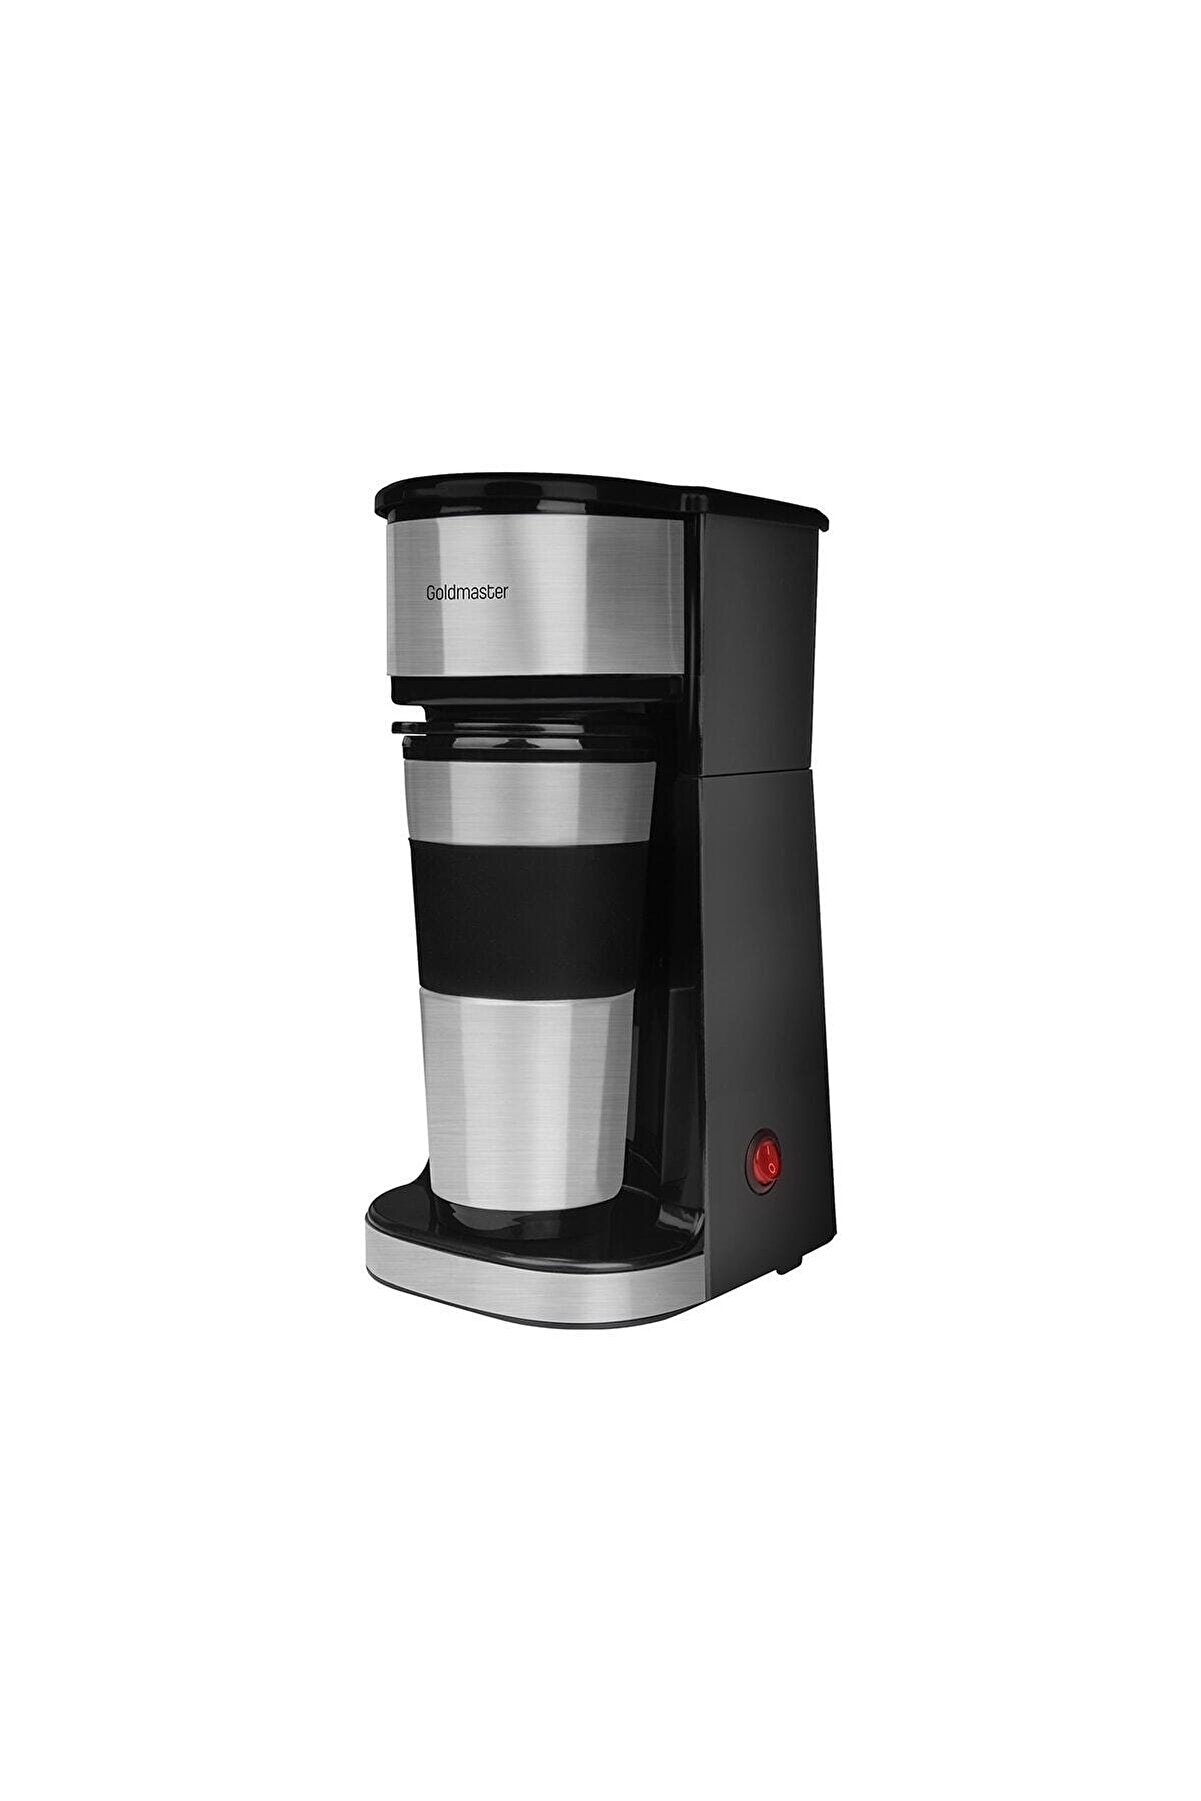 GoldMaster Karnaval Filtre Kahve Makinesi In-6330